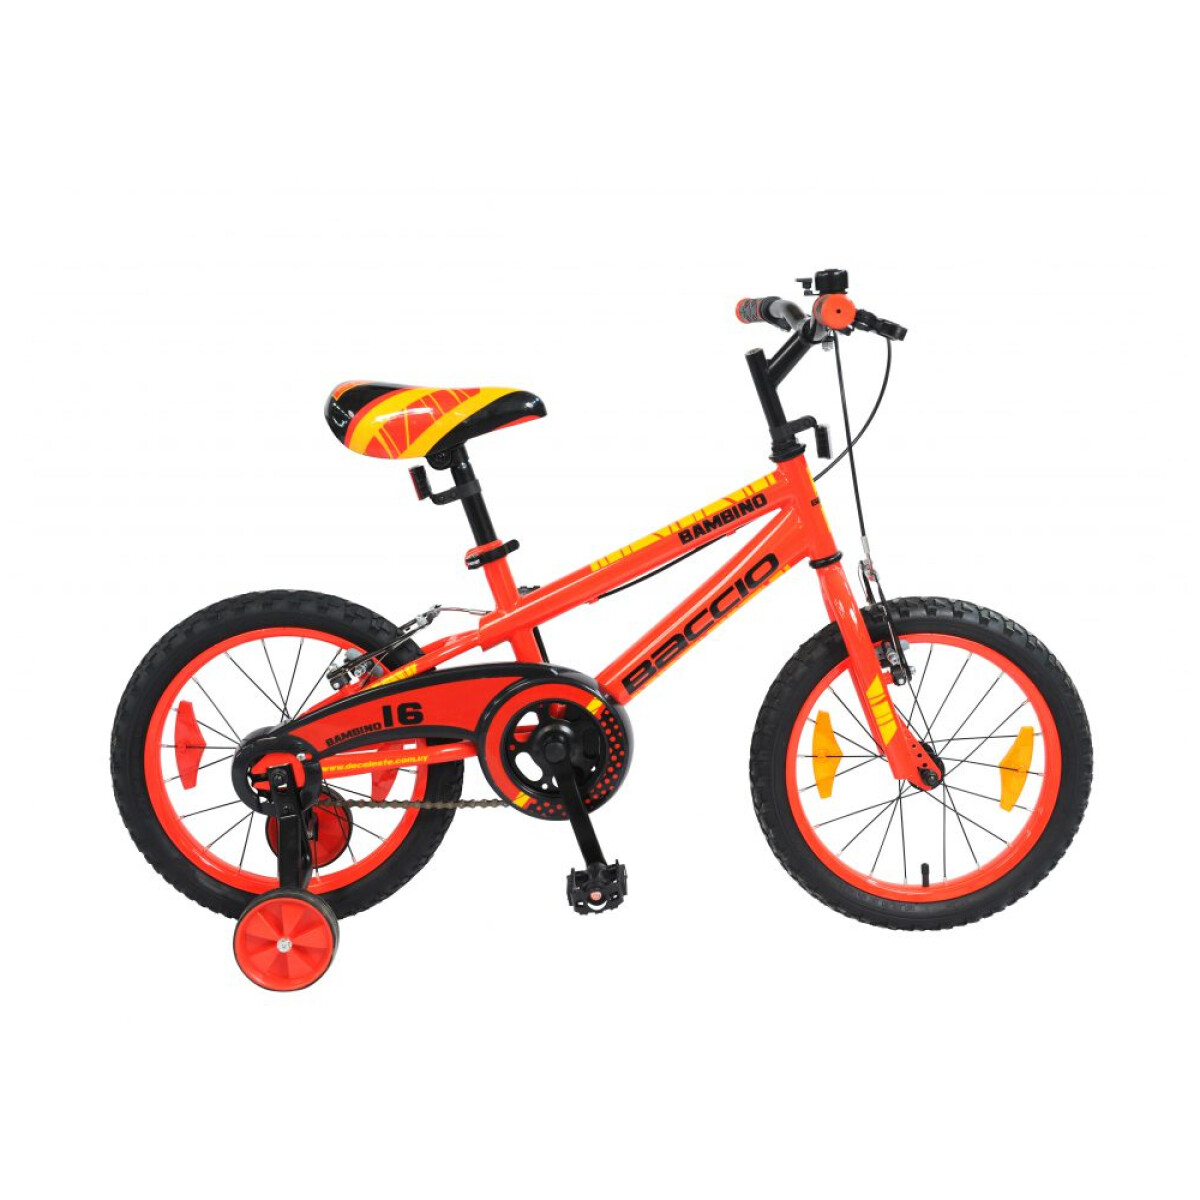 Bicicleta Baccio Bambino Rodado 16 - Naranja y Amarillo 